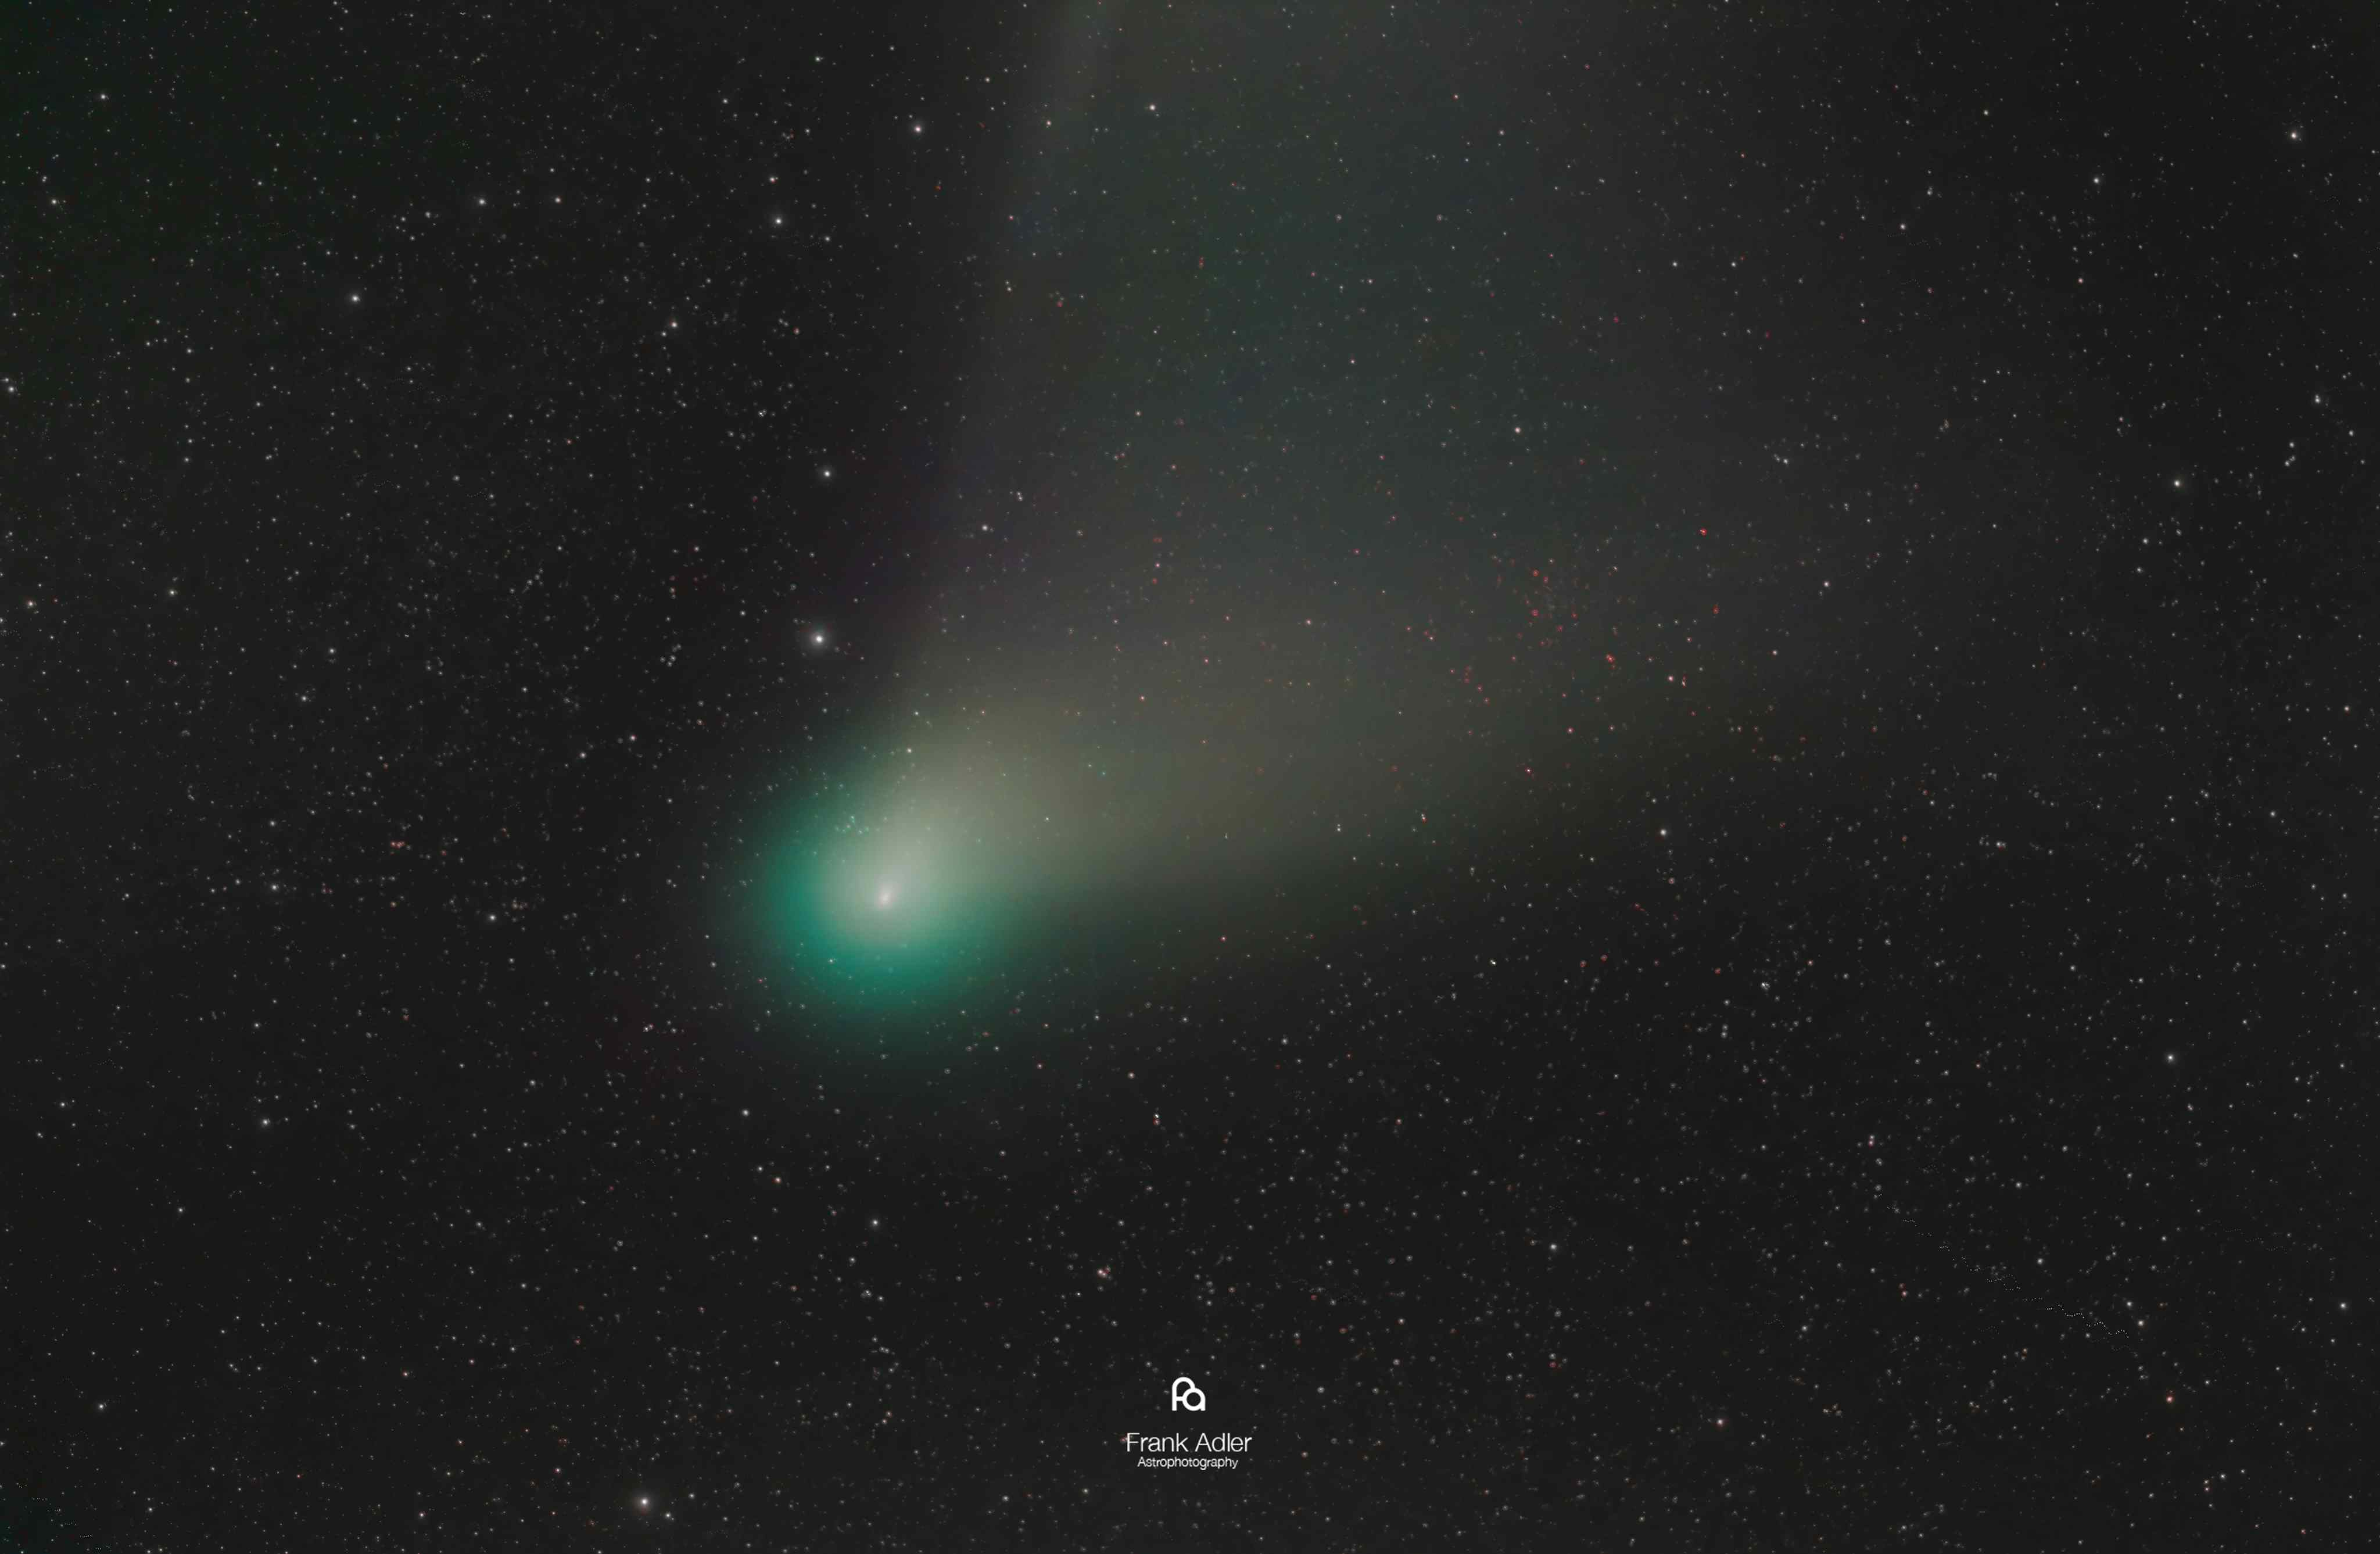 The green Comet - C/2022 E3 (ZTF)